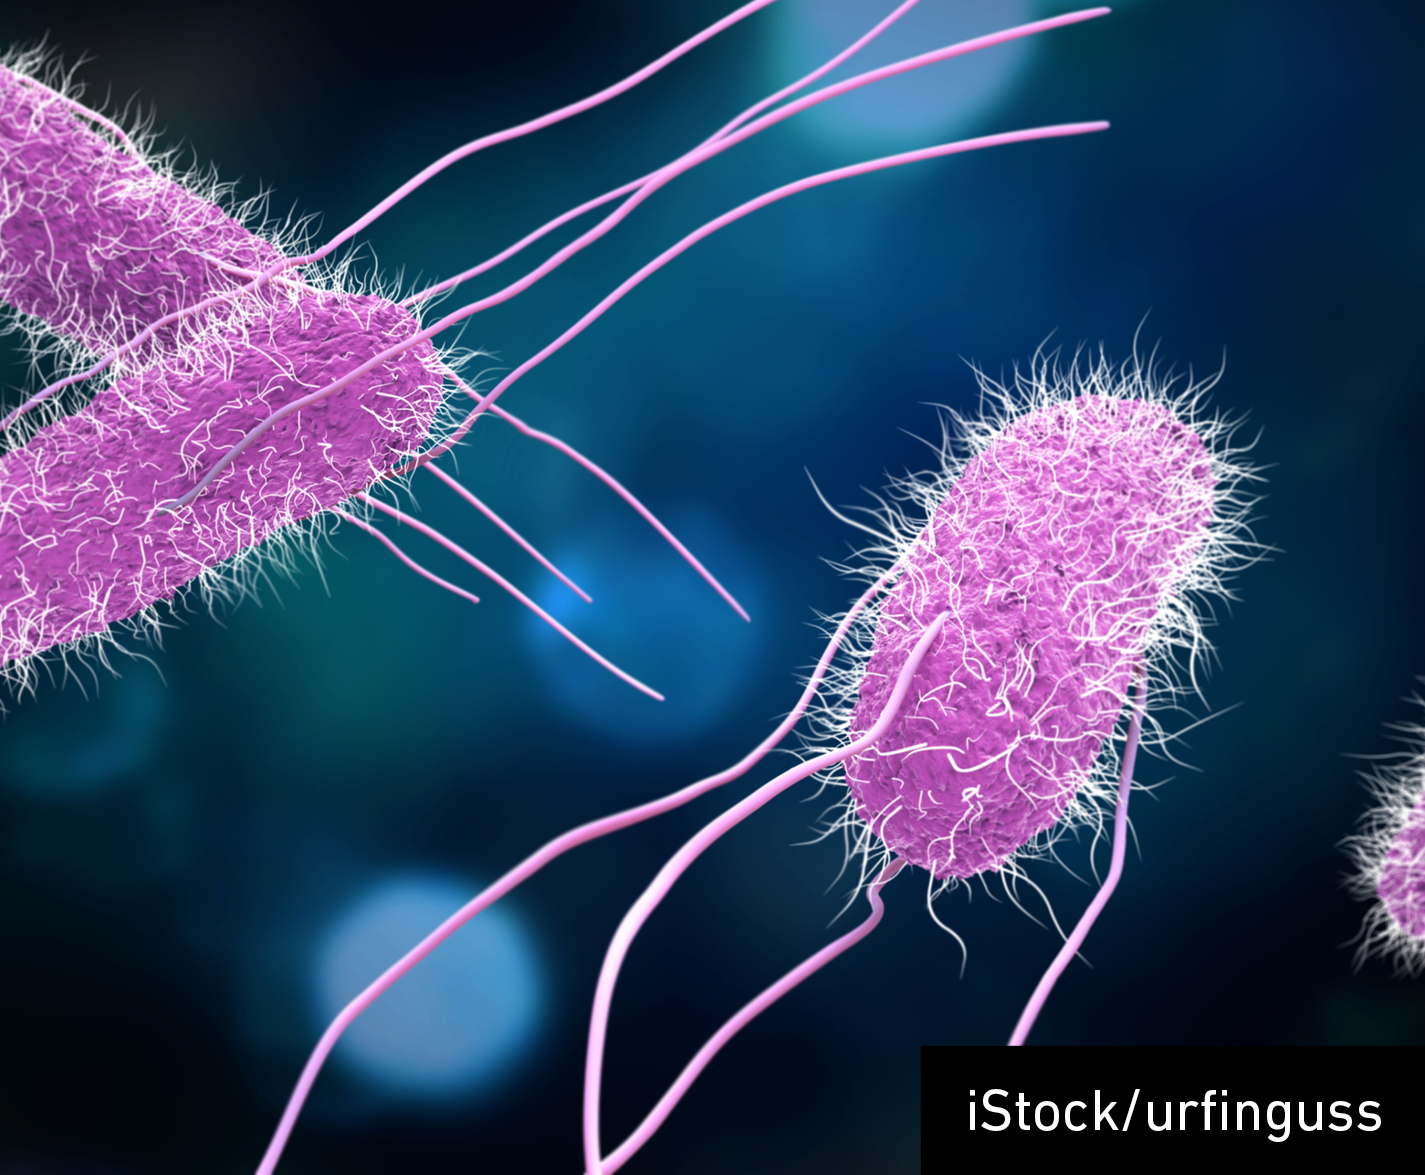 3D illustration of Salmonella Bacteria